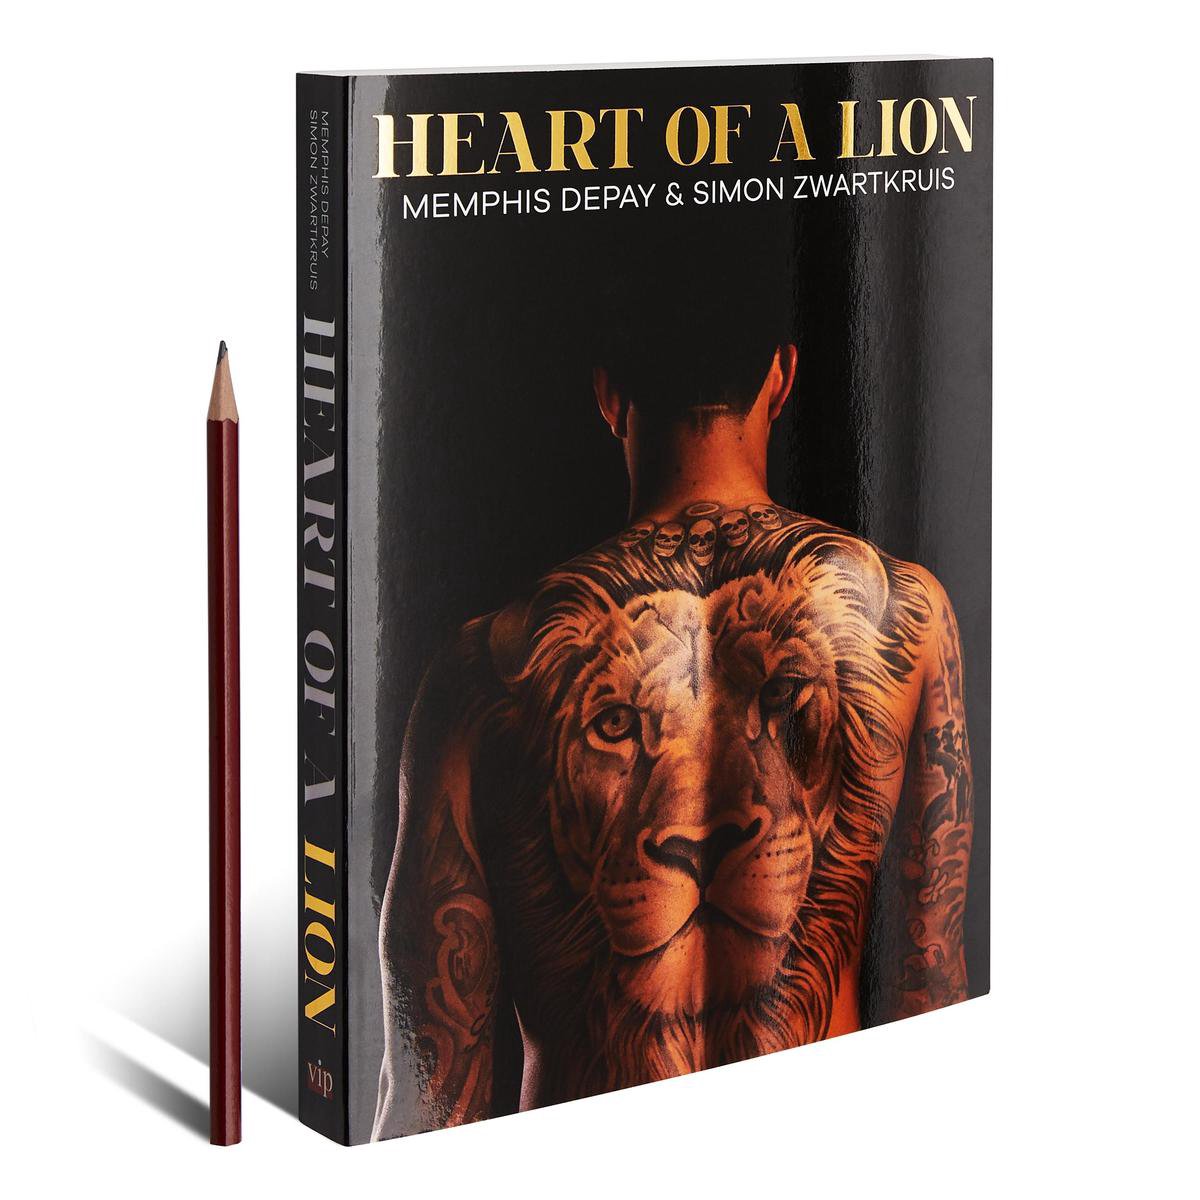  Heart of a lion (Dutch Edition): 9789400511859: Depay, Memphis,  Zwartkruis, Simon: Books